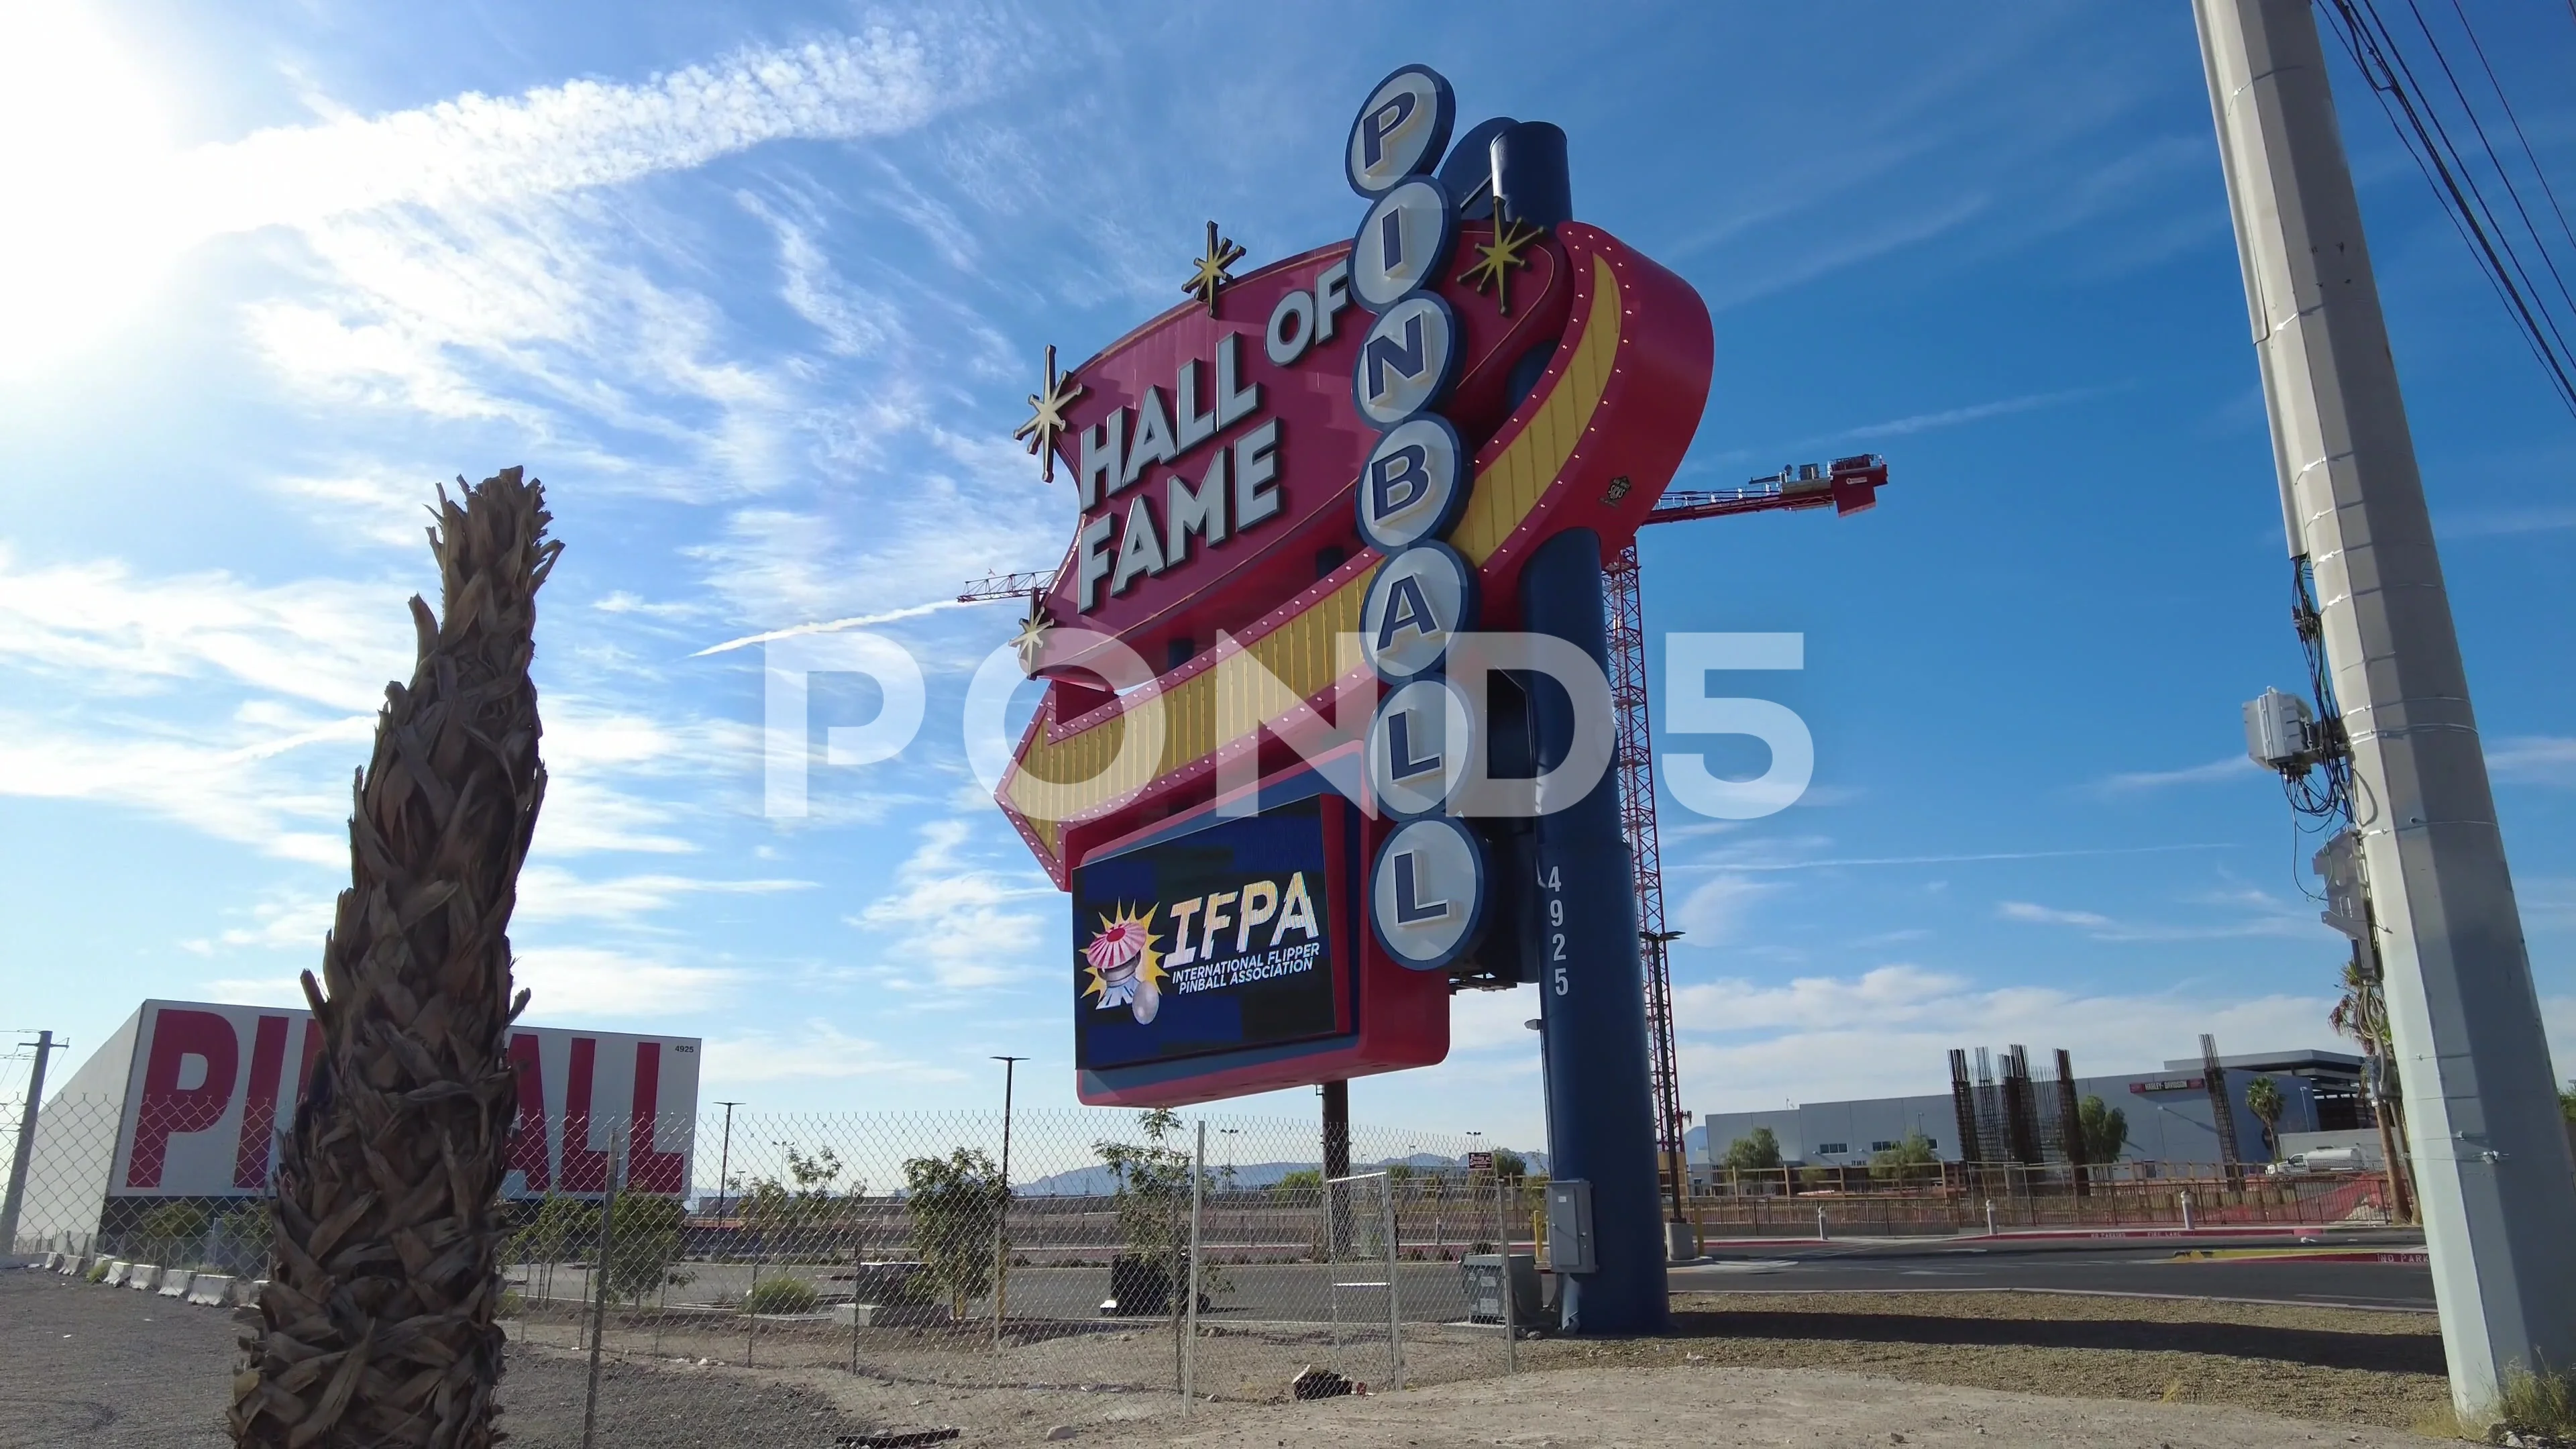 4K] FULL TOUR Pinball Hall of Fame Las Vegas, Nevada